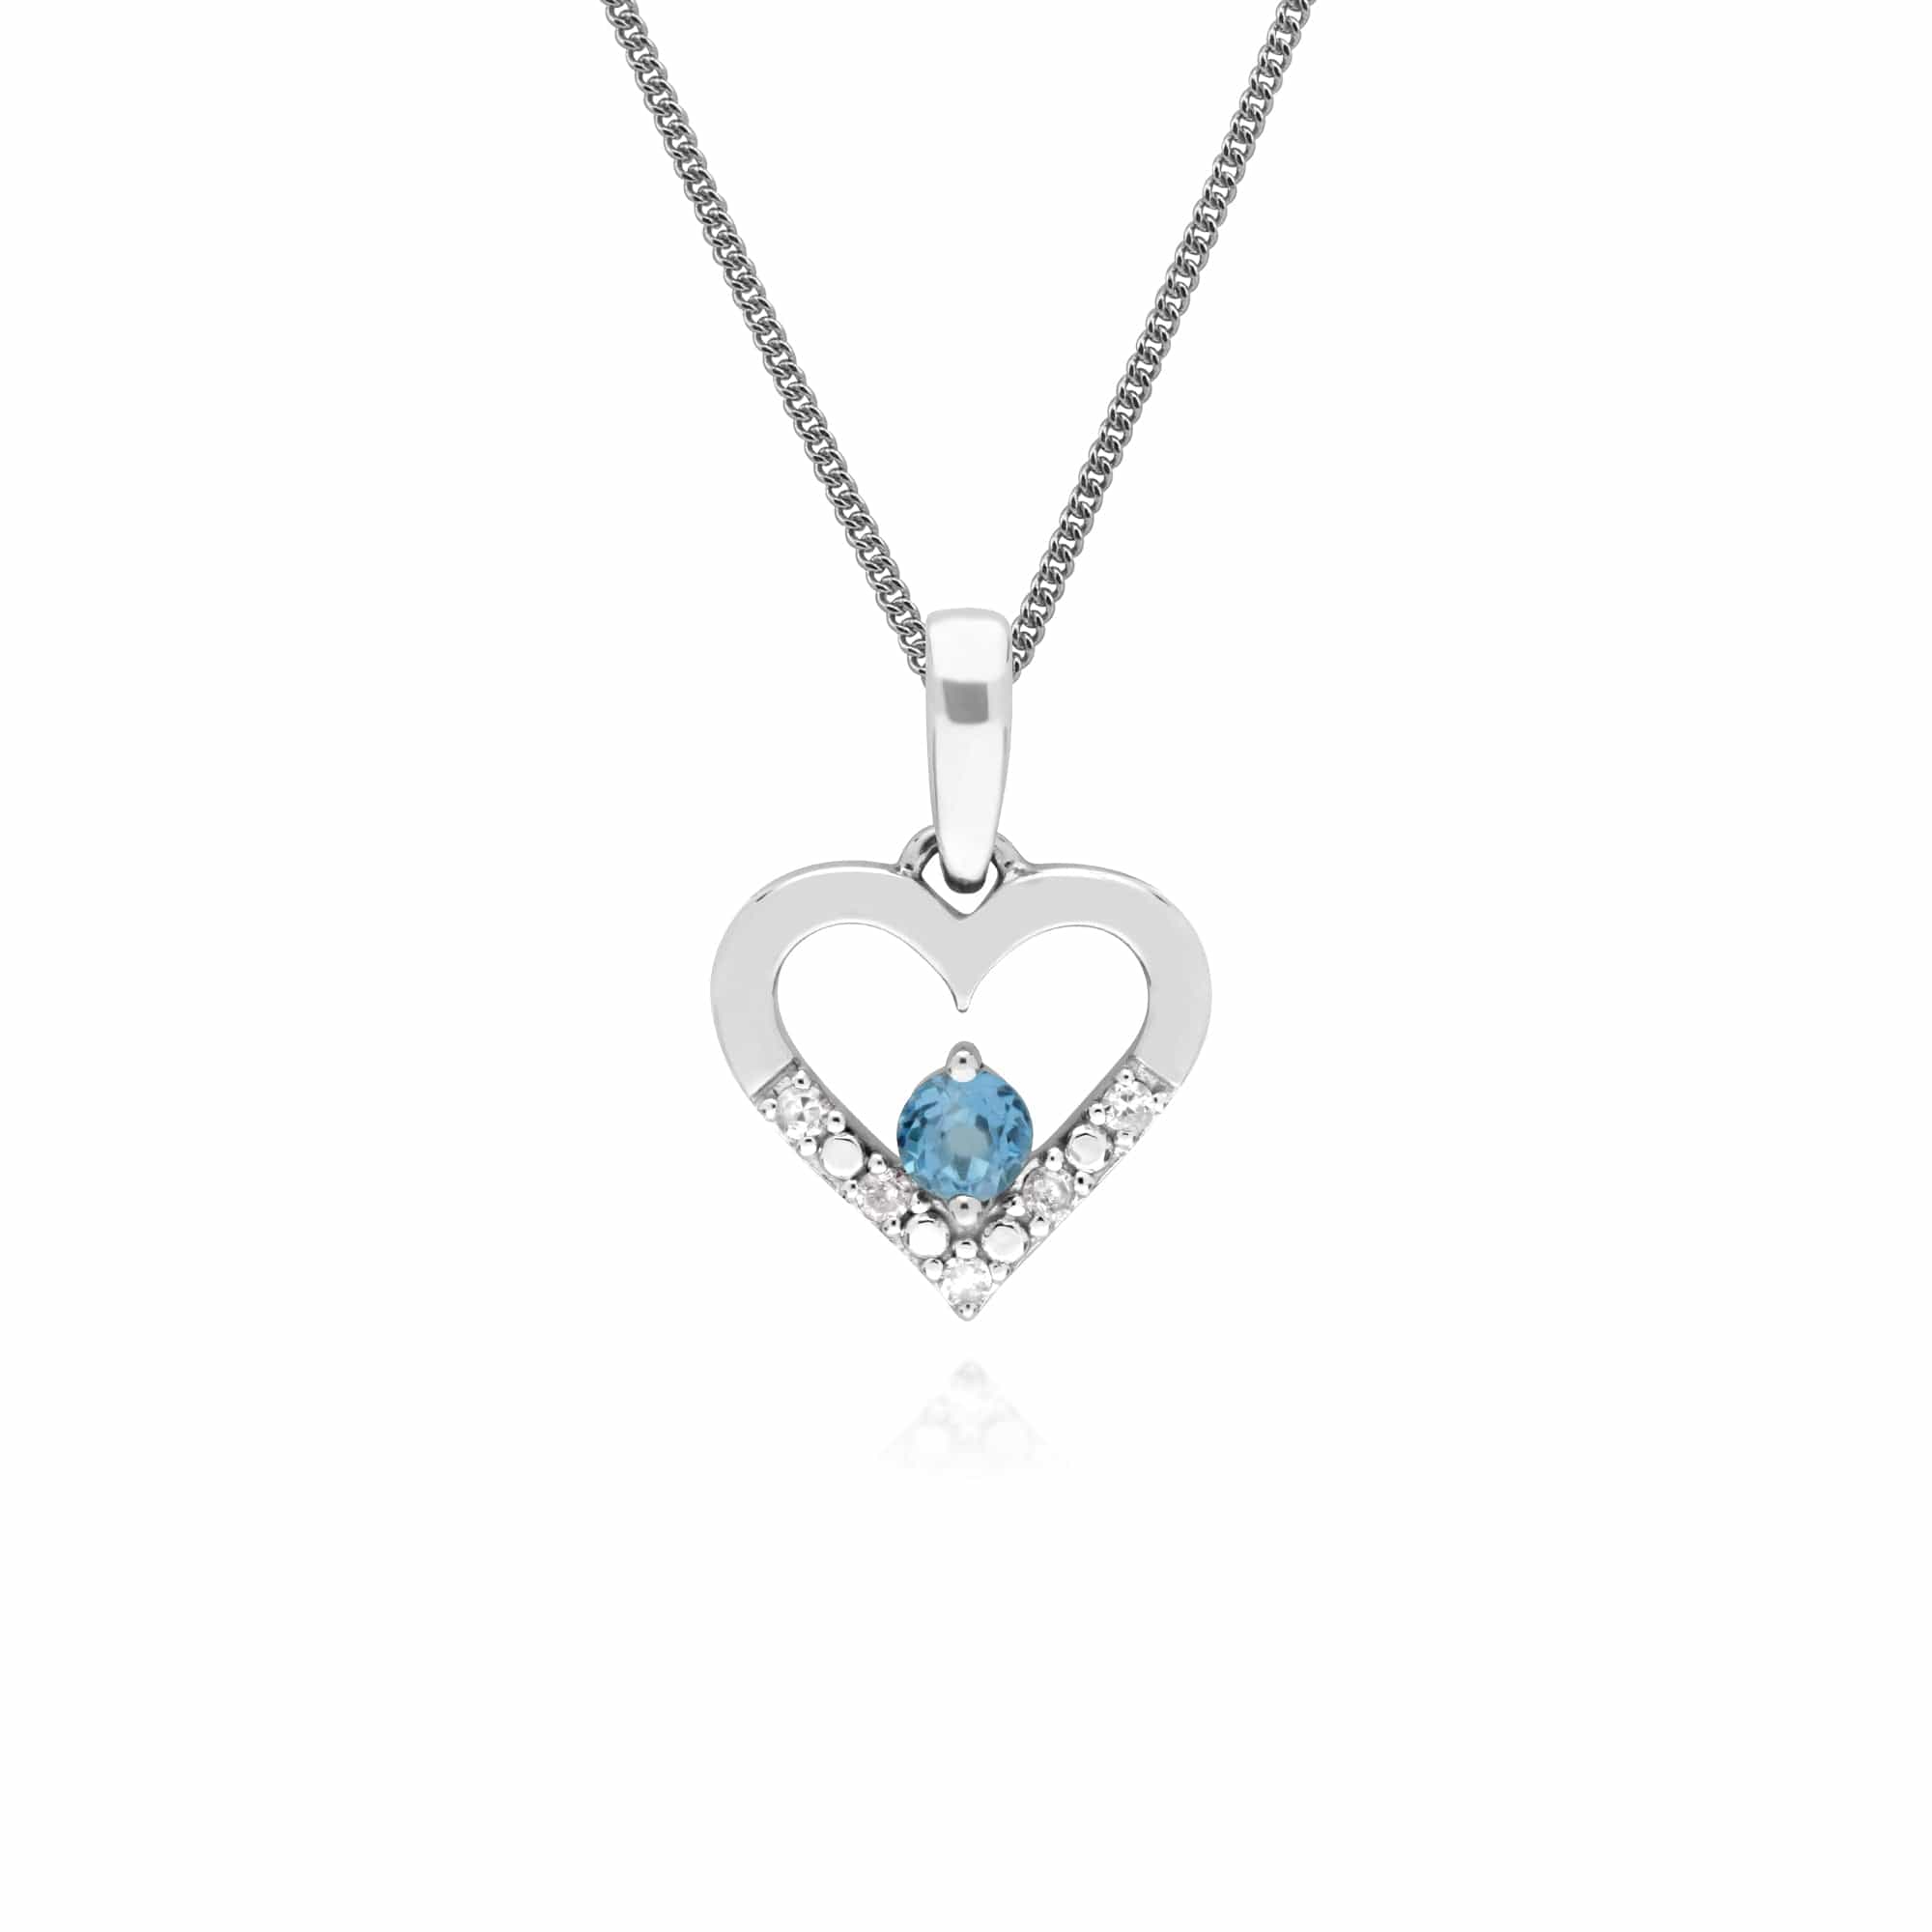 162E0258069-162P0219069 Classic Round Blue Topaz & Diamond Heart Drop Earrings & Pendant Set in 9ct White Gold 3